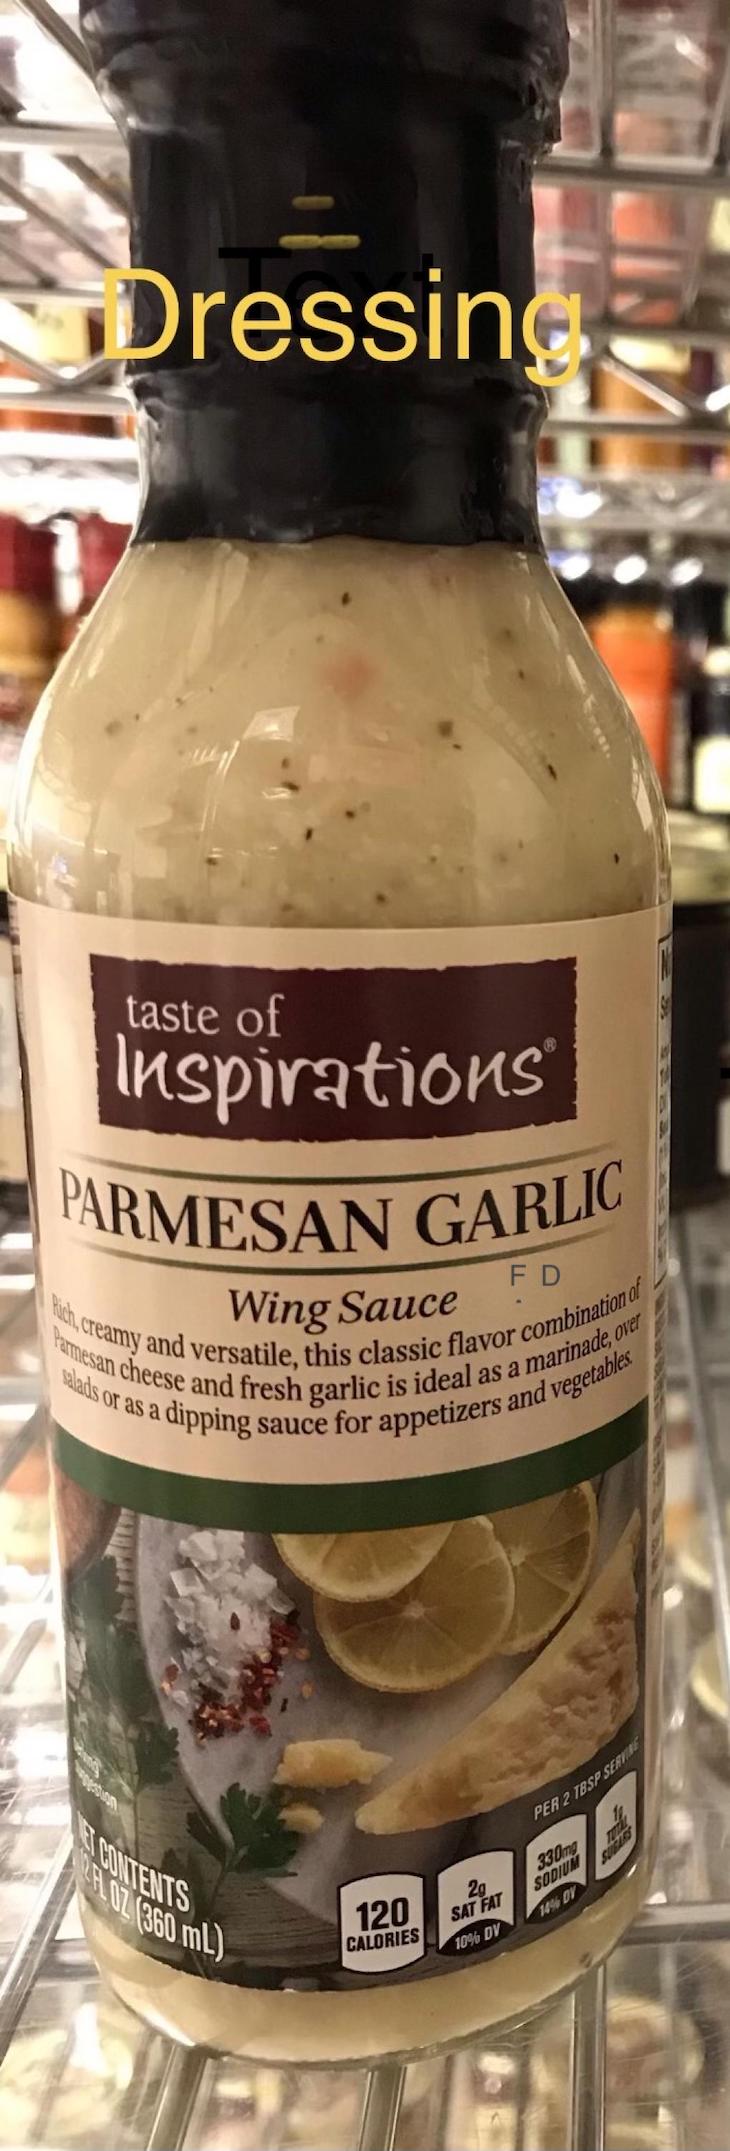 Taste of Inspirations Parmesan Garlic Wing Sauce Recalled For Allergen